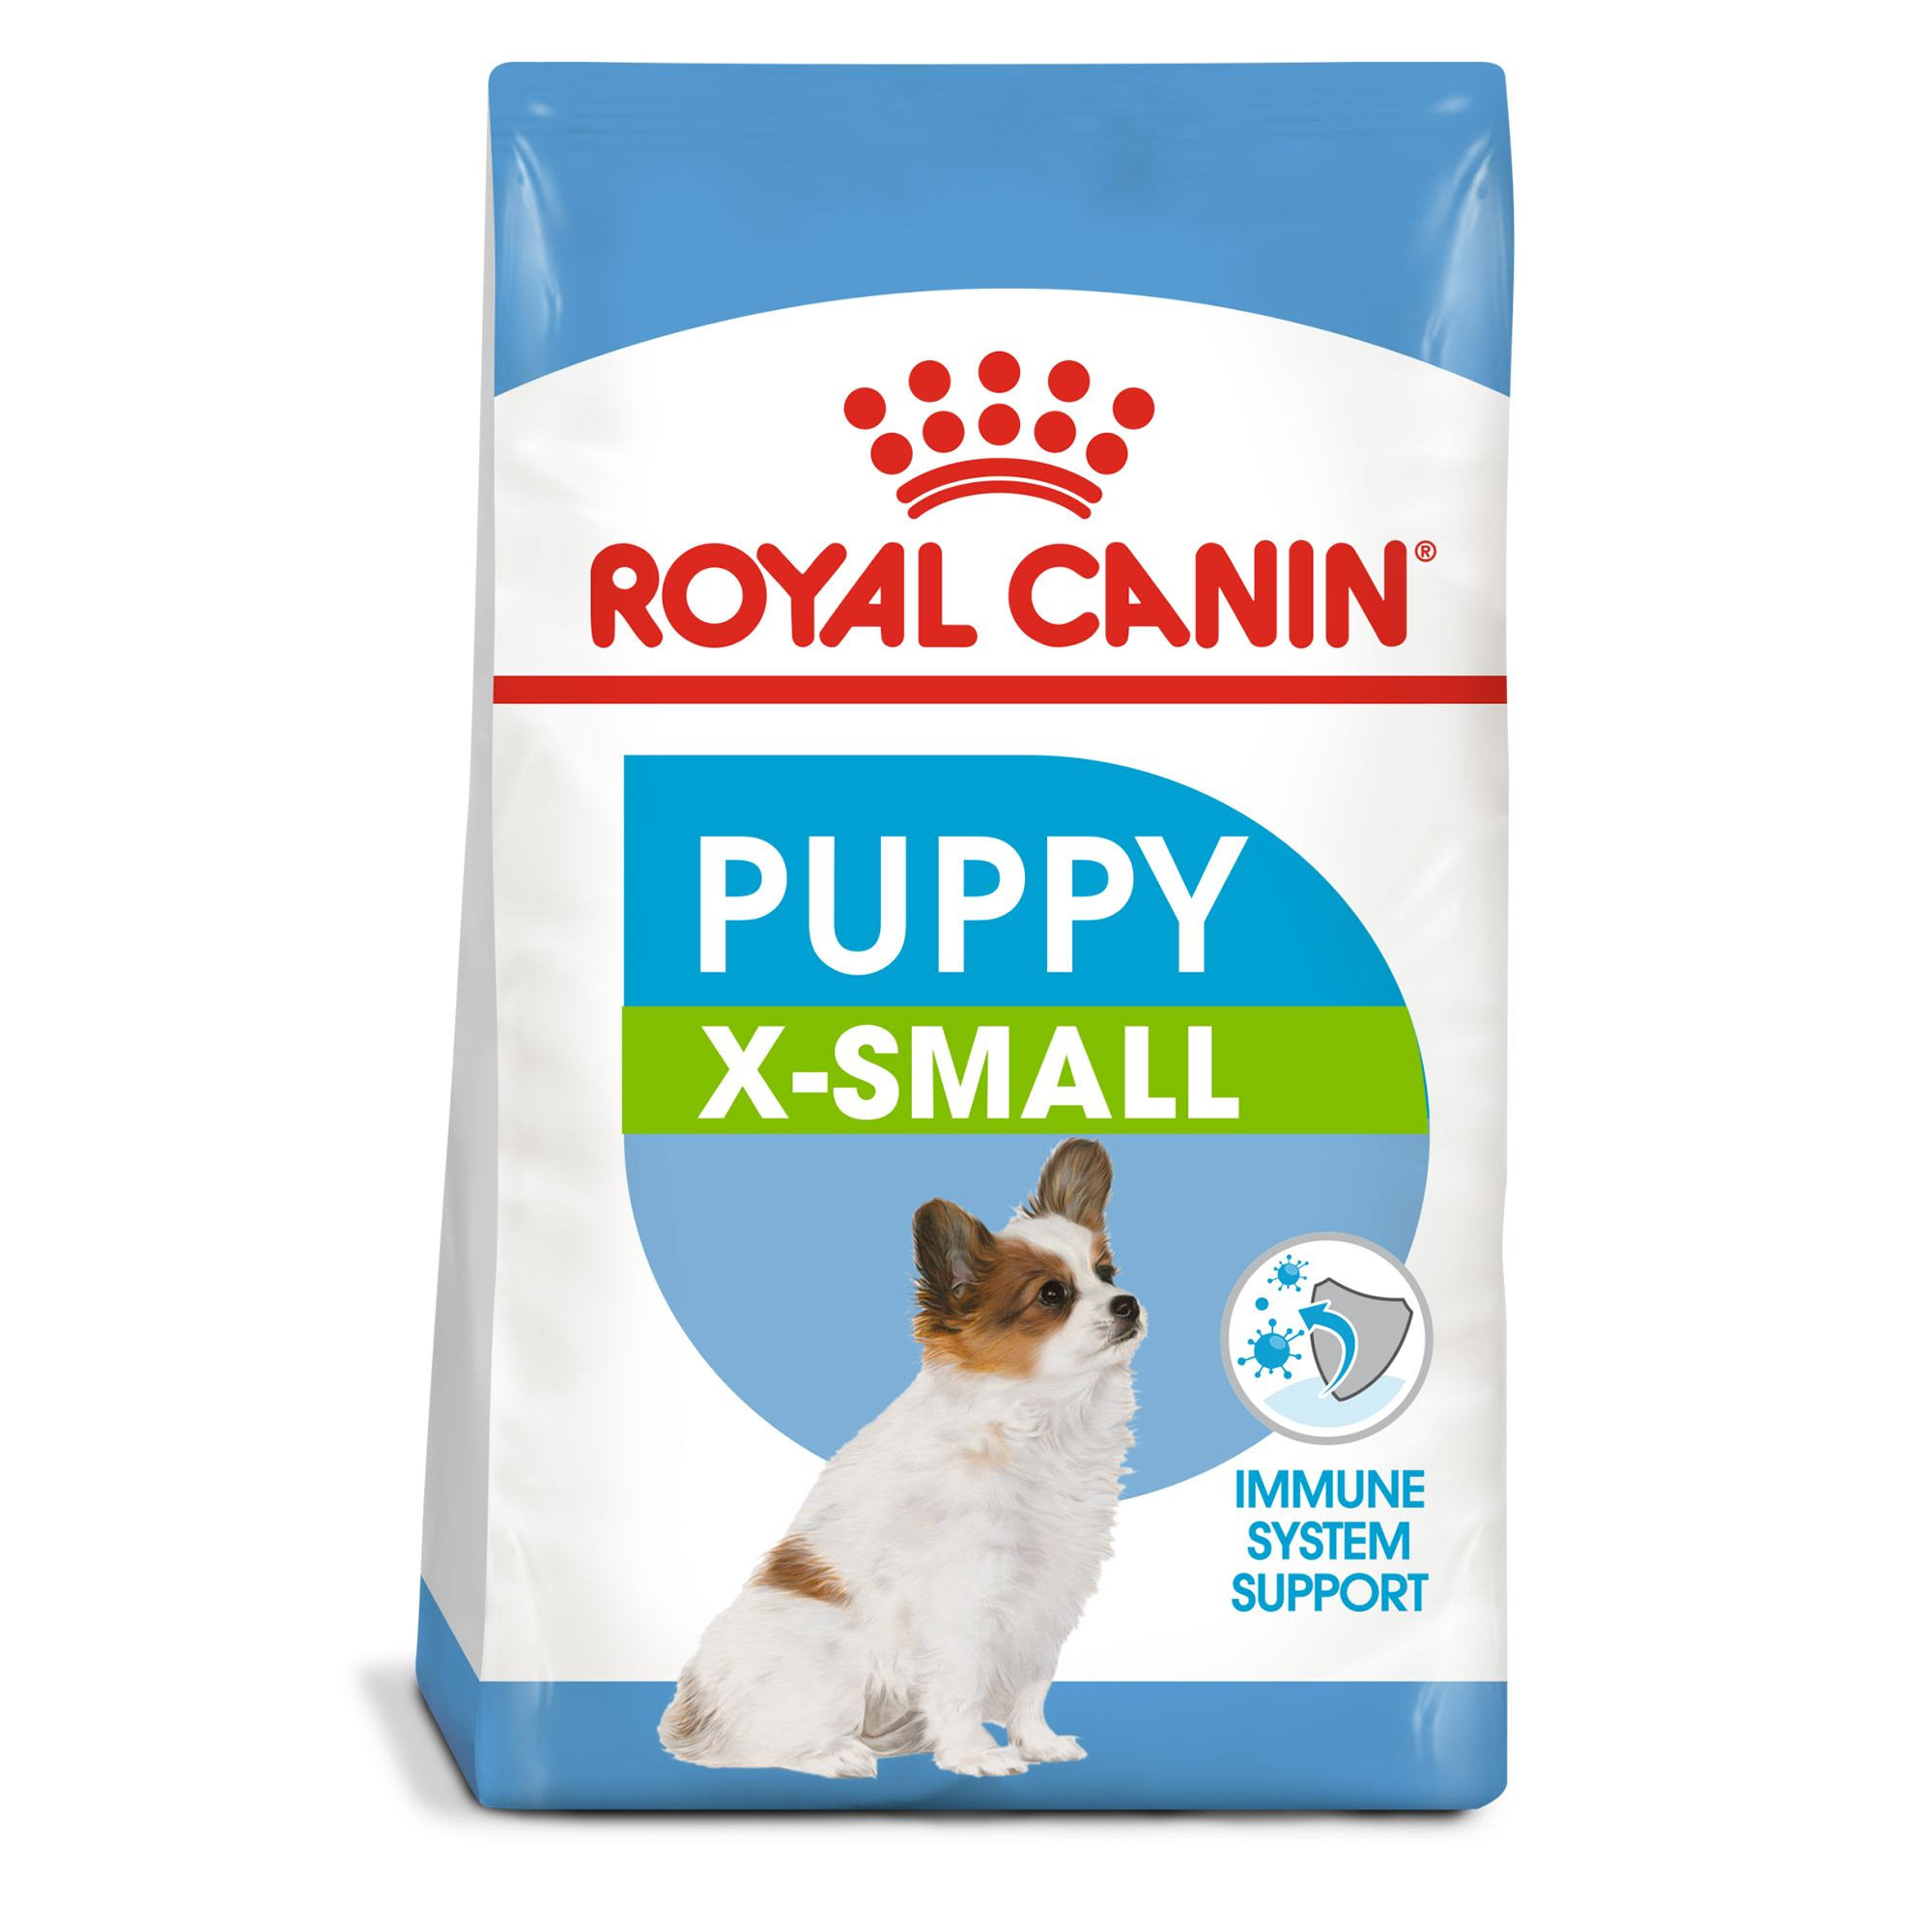 Royal Canin B0076l2wu2 Size Health Nutrition X-Small Puppy Dry Dog Food - 3lbs